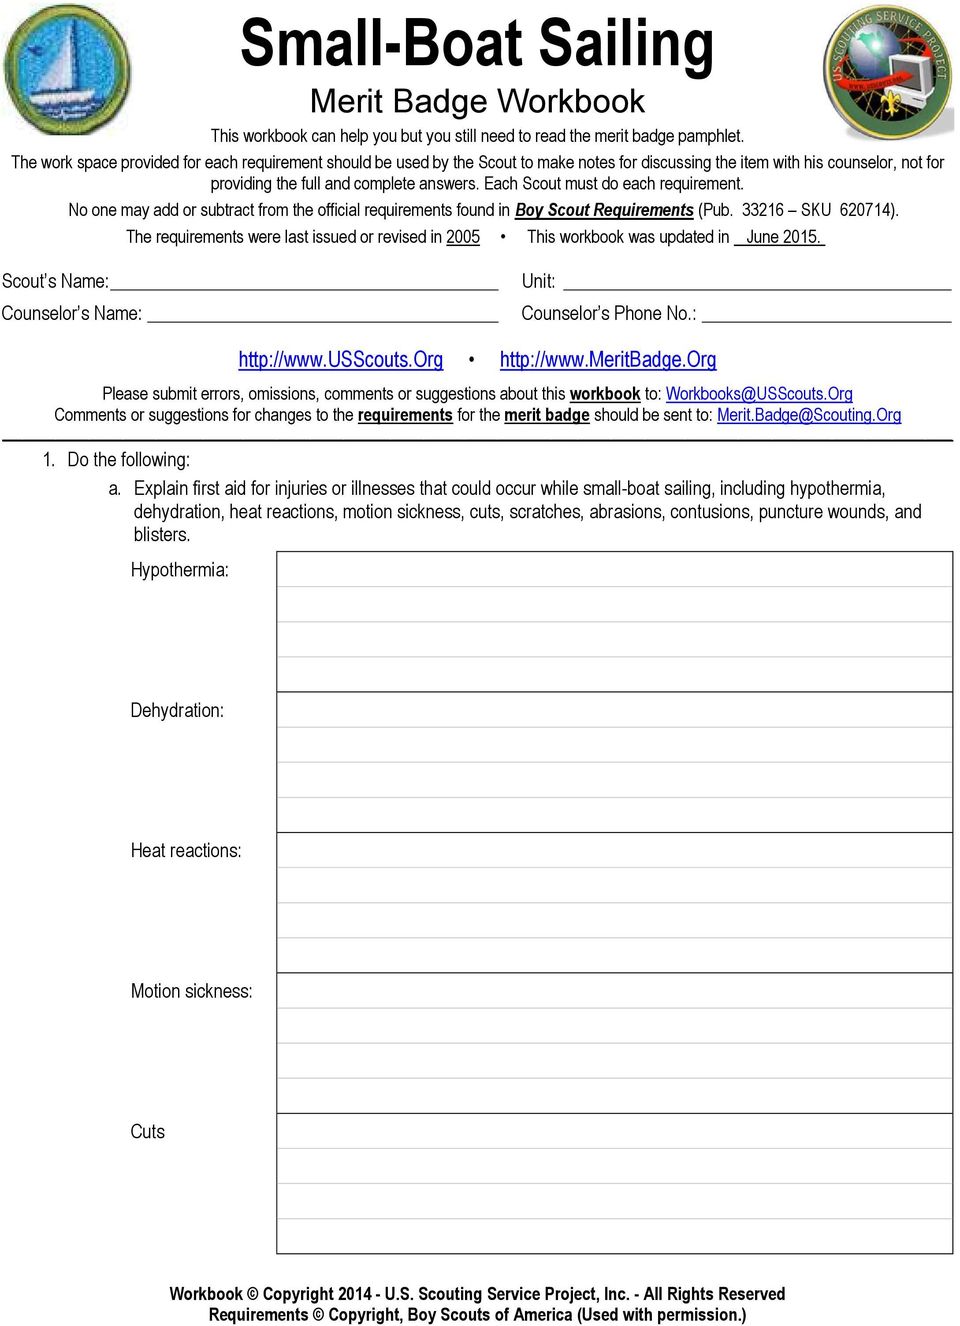 Small-Boat Sailing Merit Badge Workbook - PDF Free Download For Weather Merit Badge Worksheet